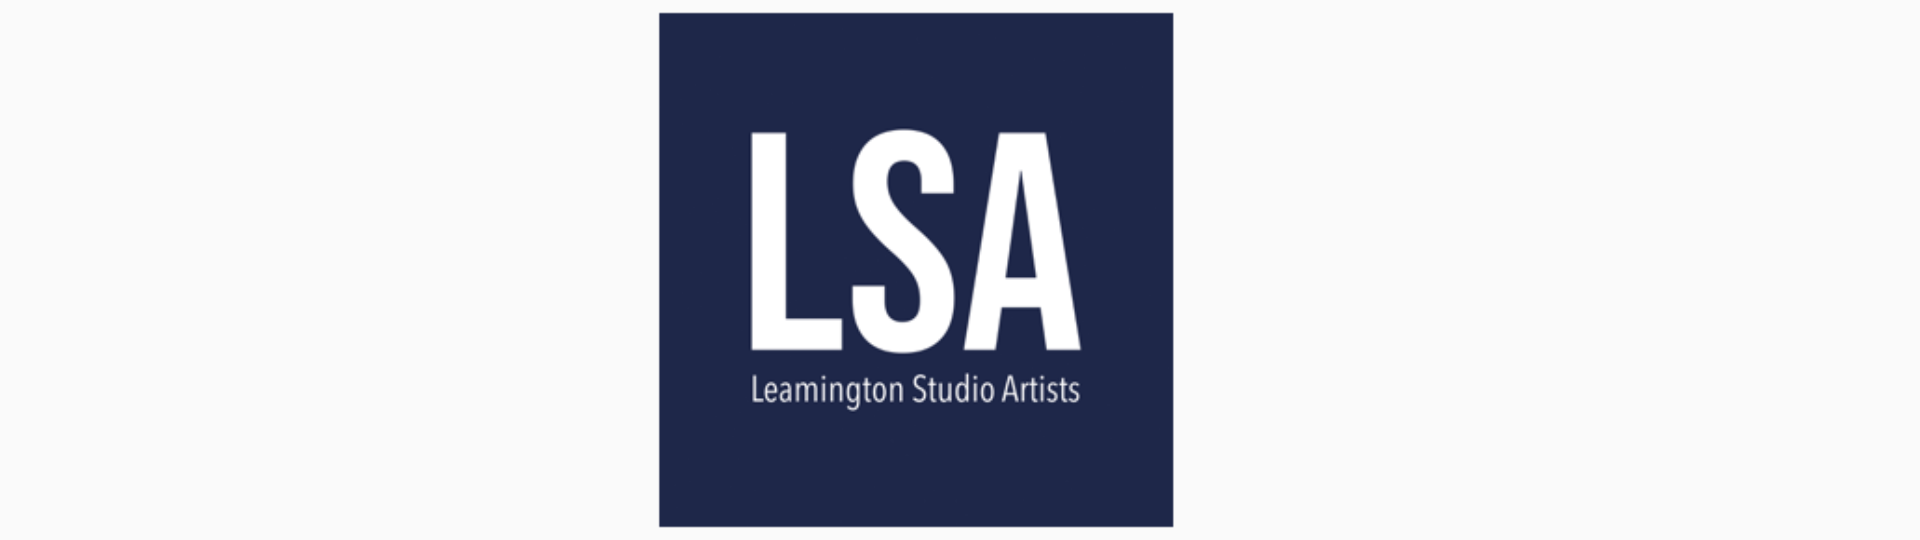 LSA - Leamington Studio Artists